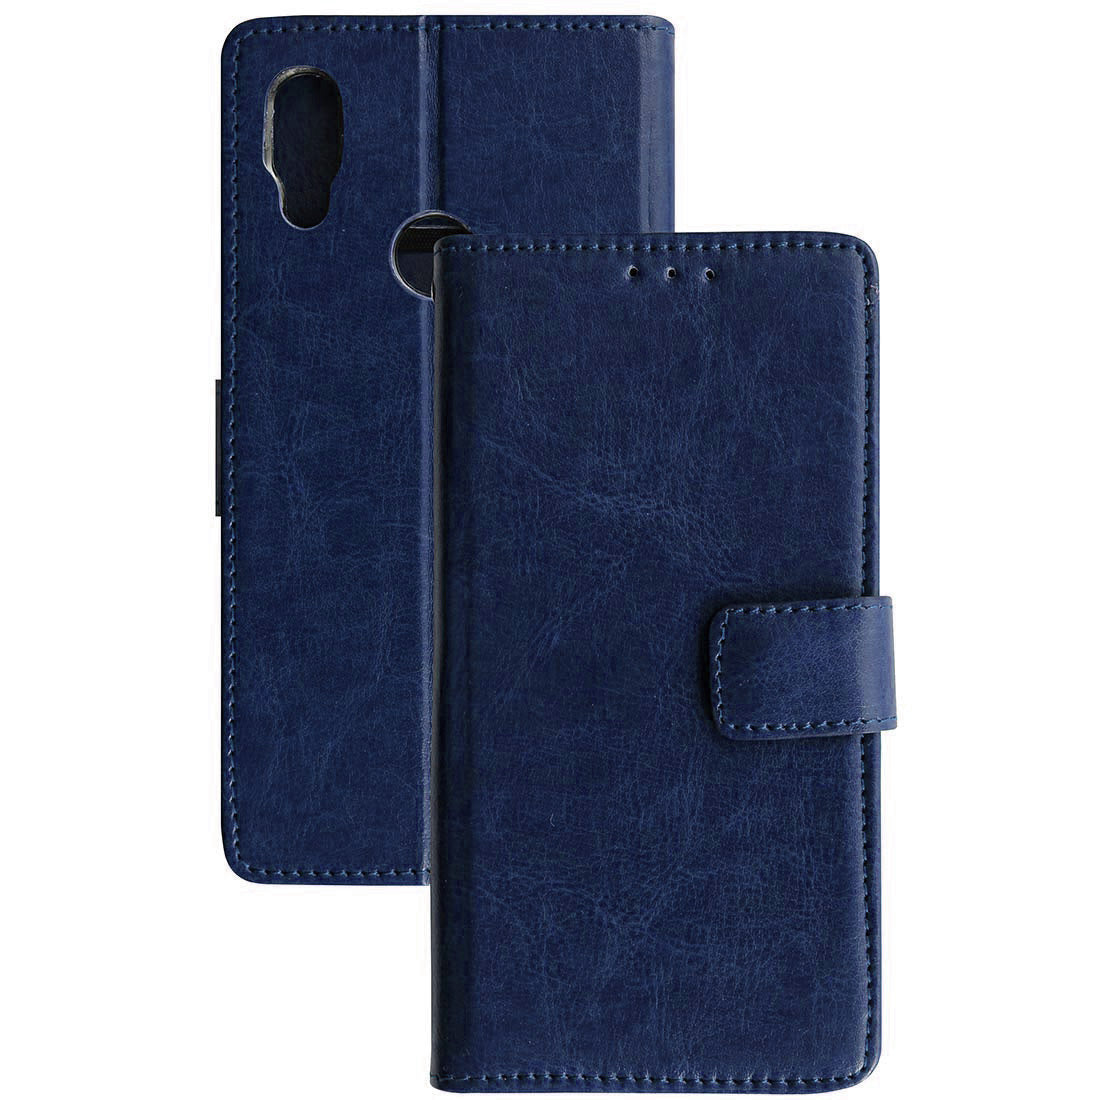 Premium Wallet Flip Cover for Mi Redmi 7